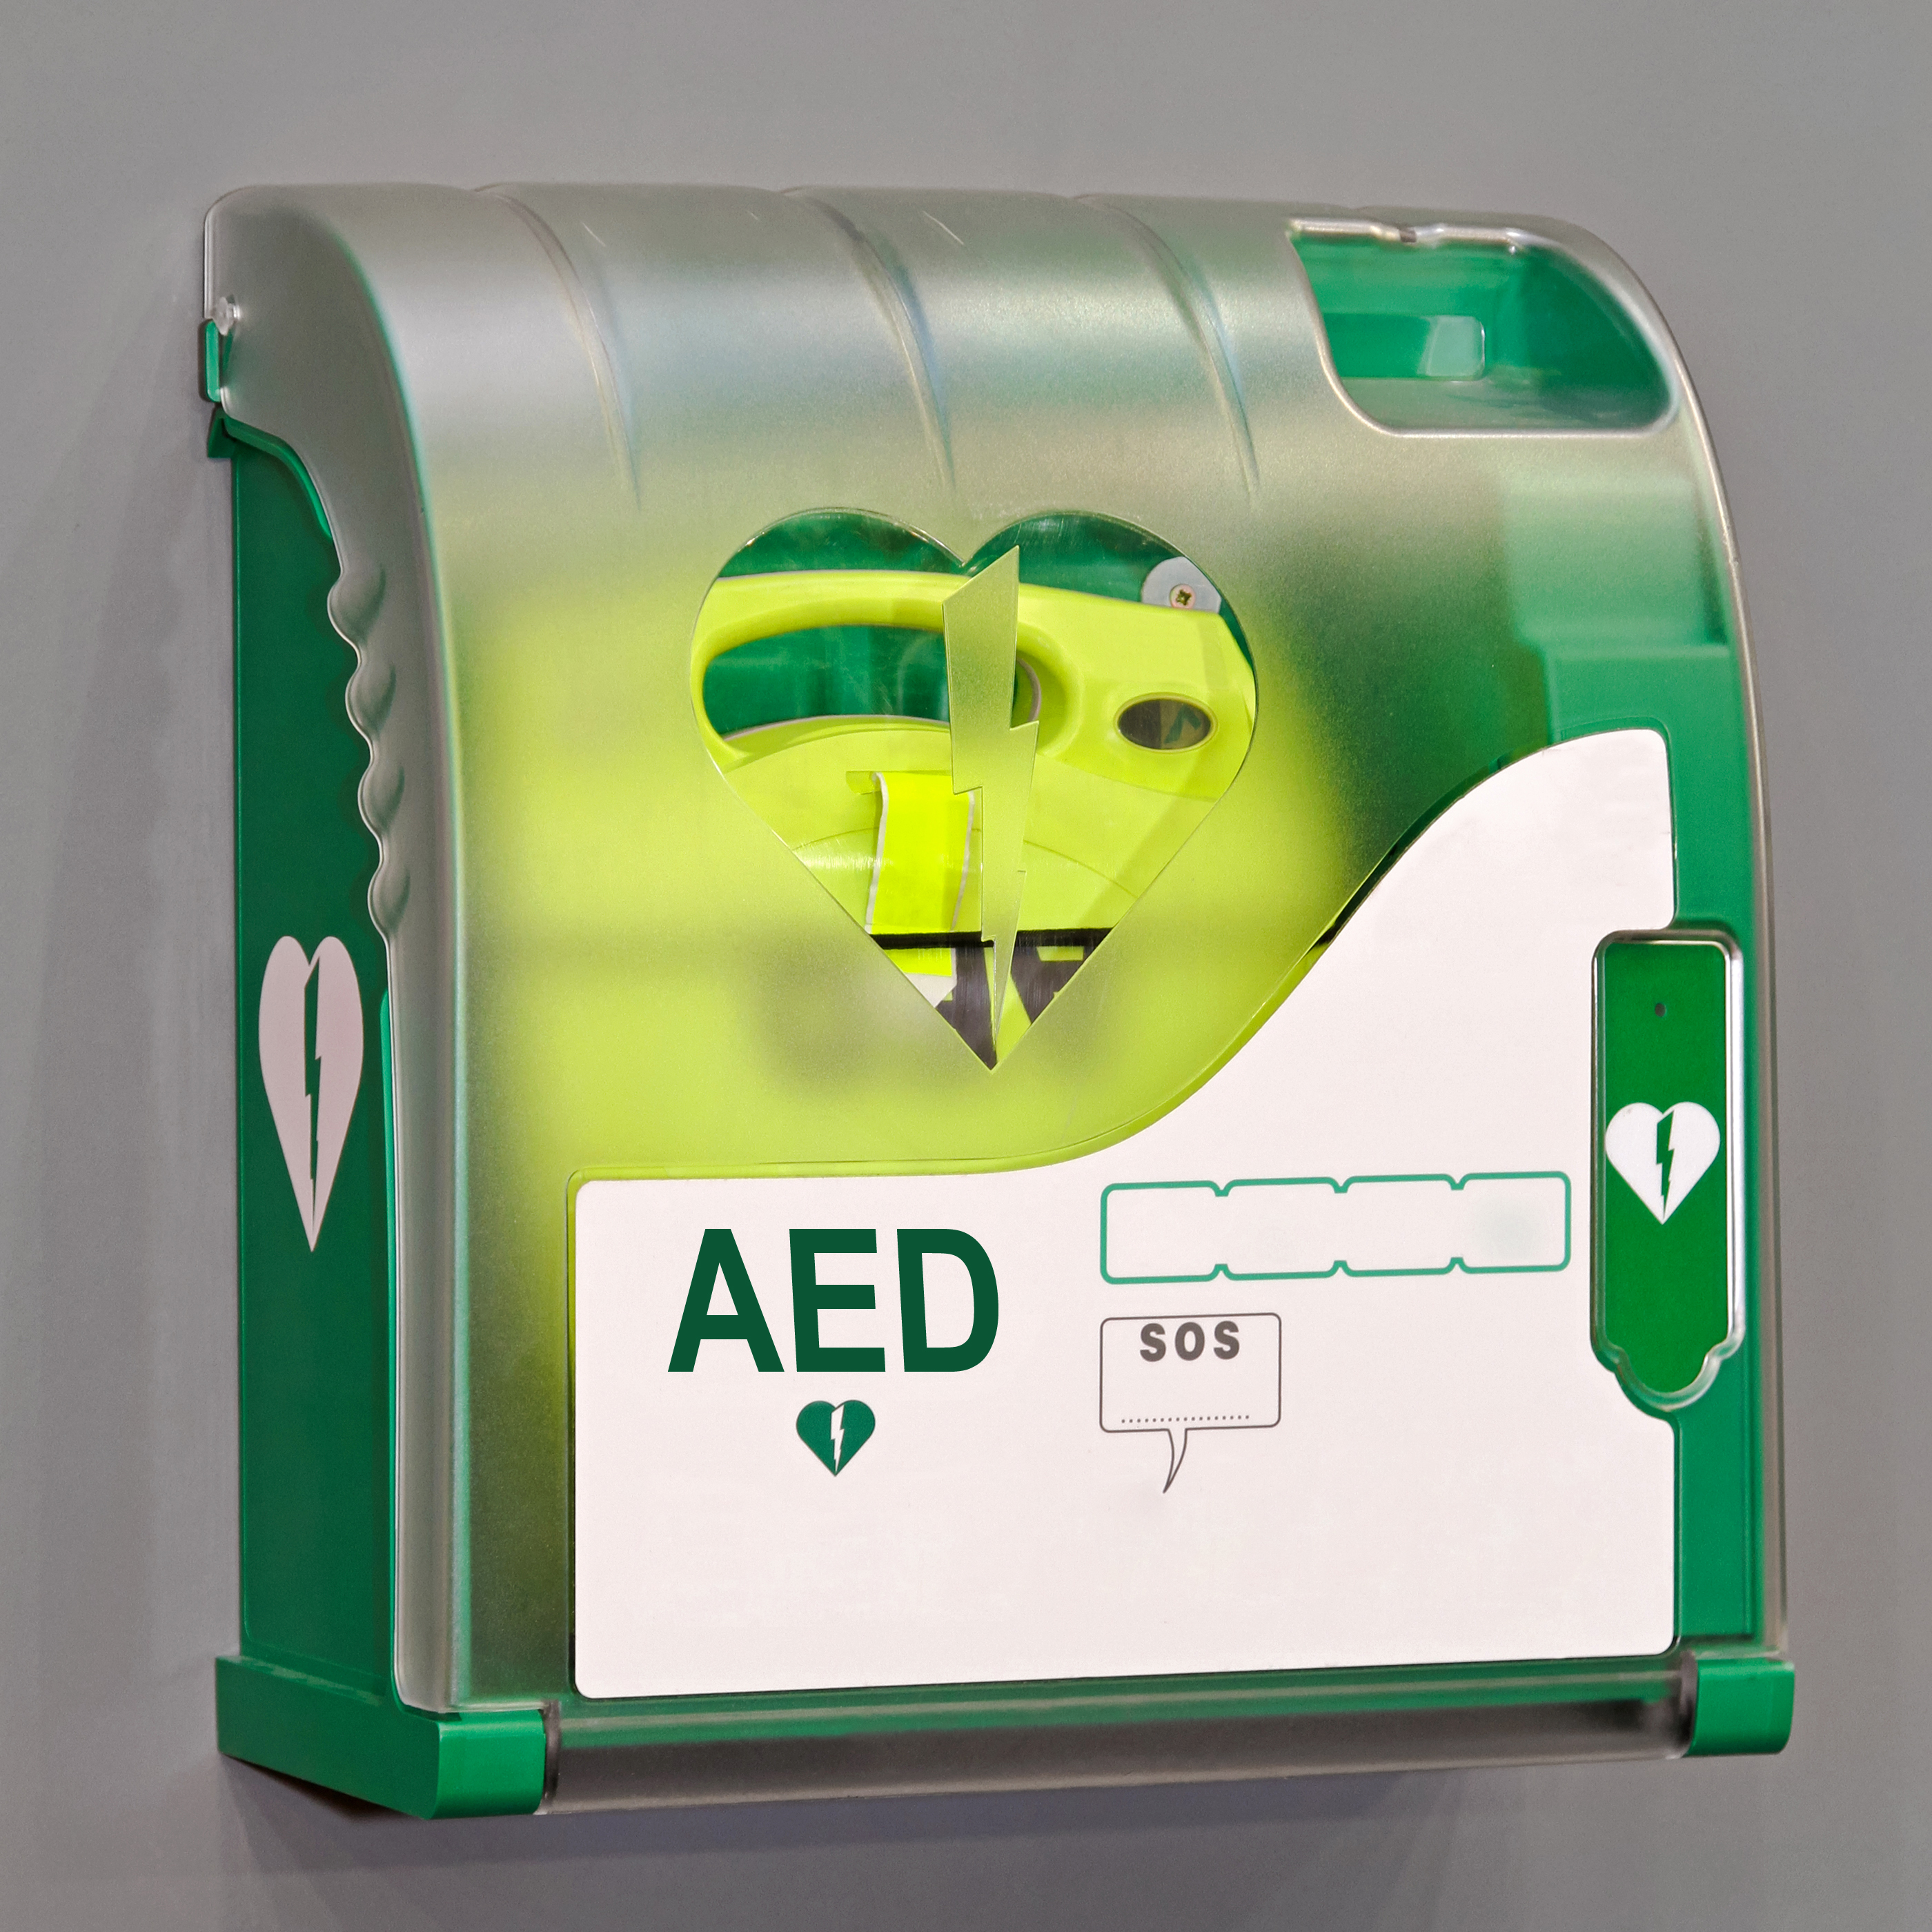 Image representing P266 Automated External Defibrillators